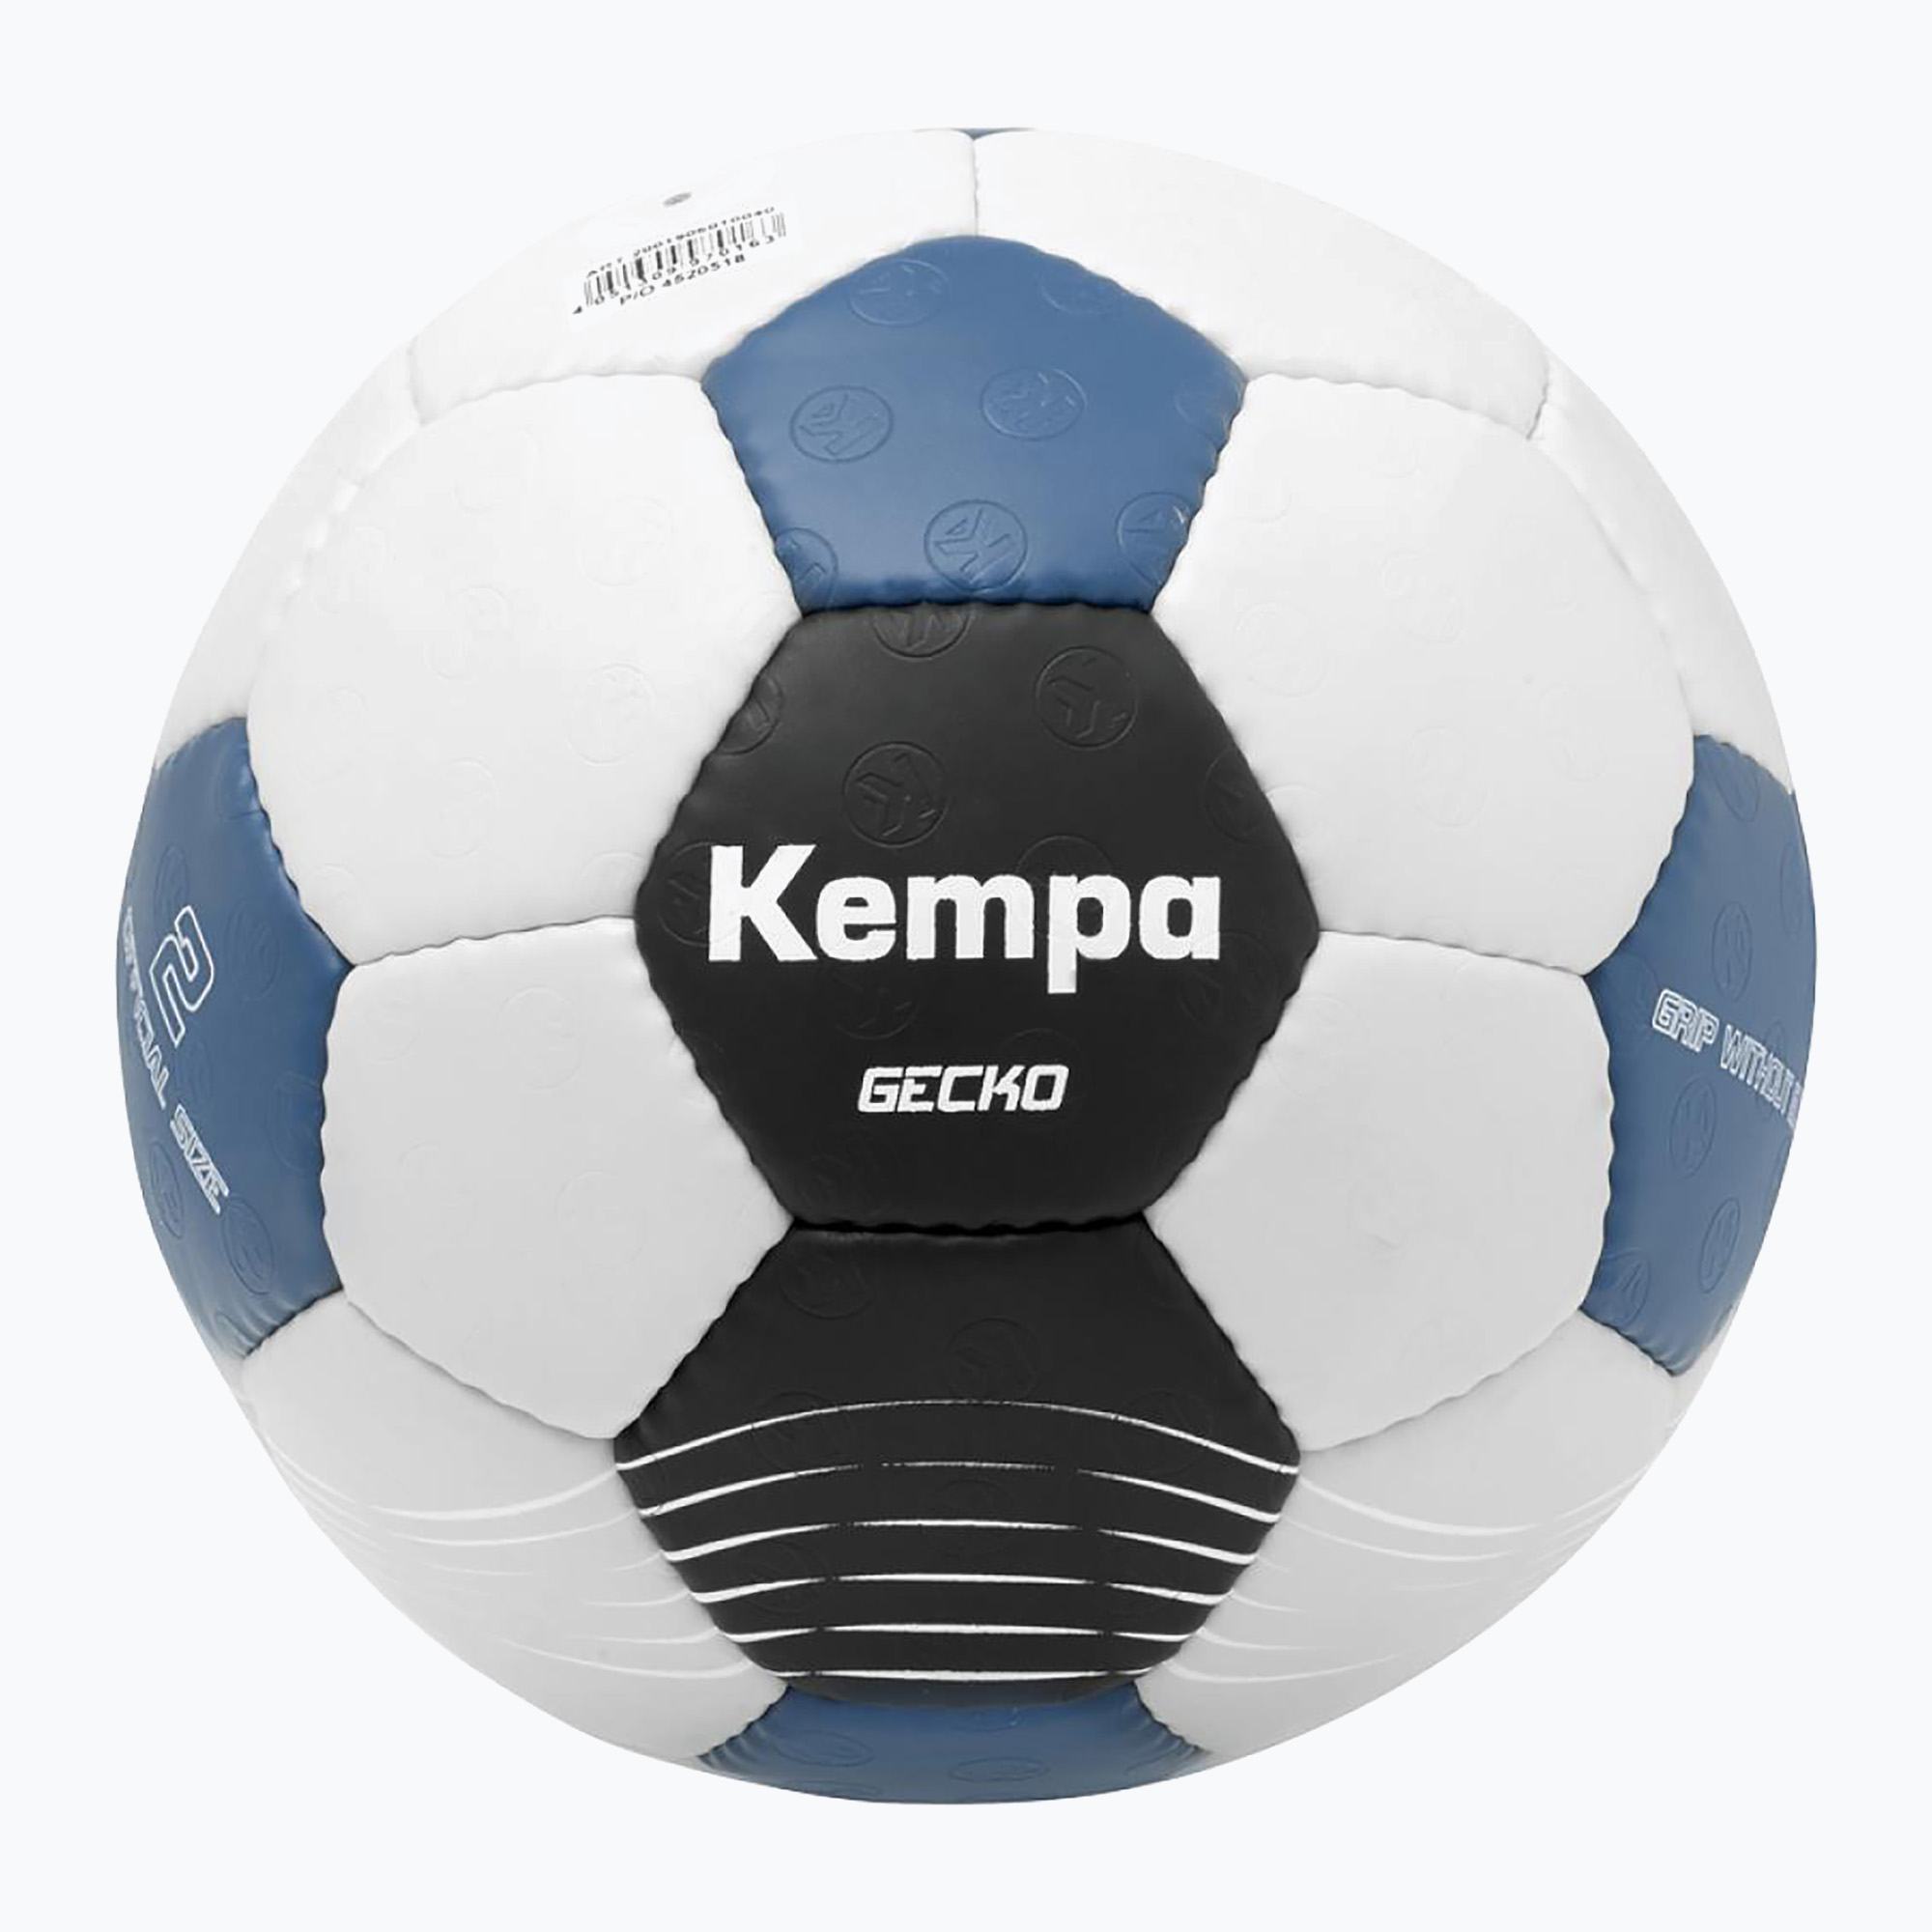 Kempa Gecko хандбална топка 200190601/3 размер 3